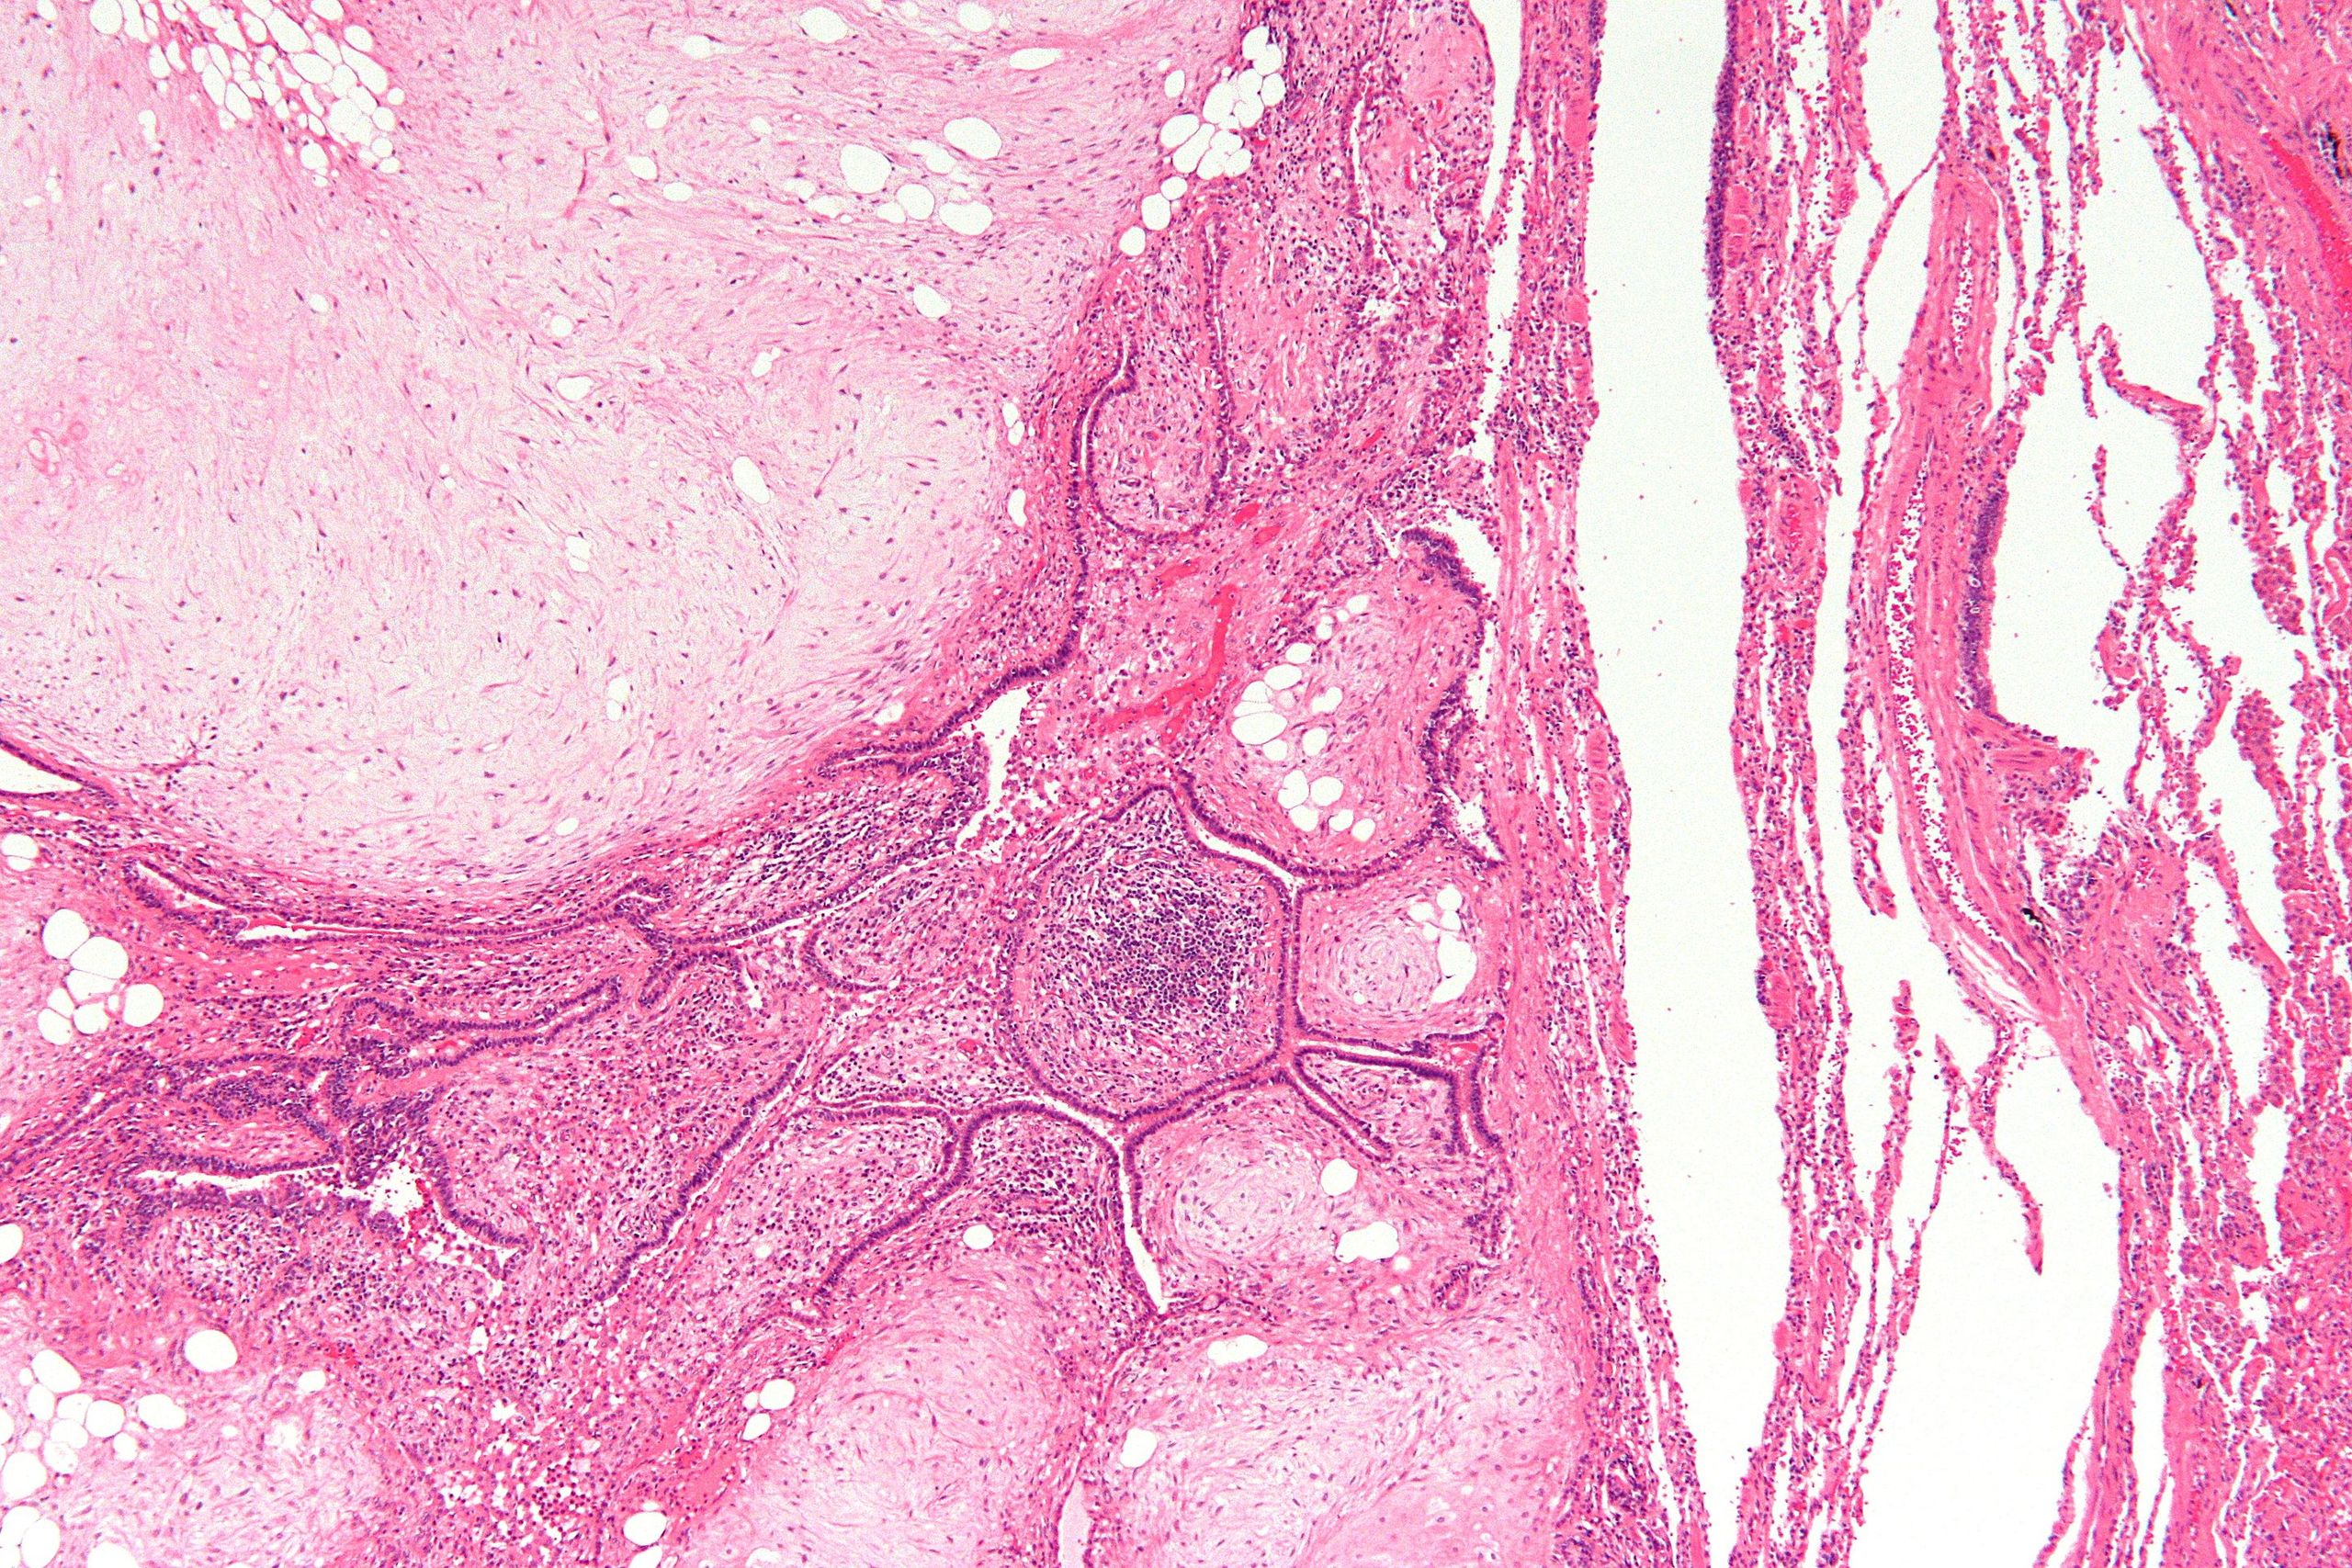 Low magnification micrograph of a pulmonary hamartoma. H&E stain.[7]